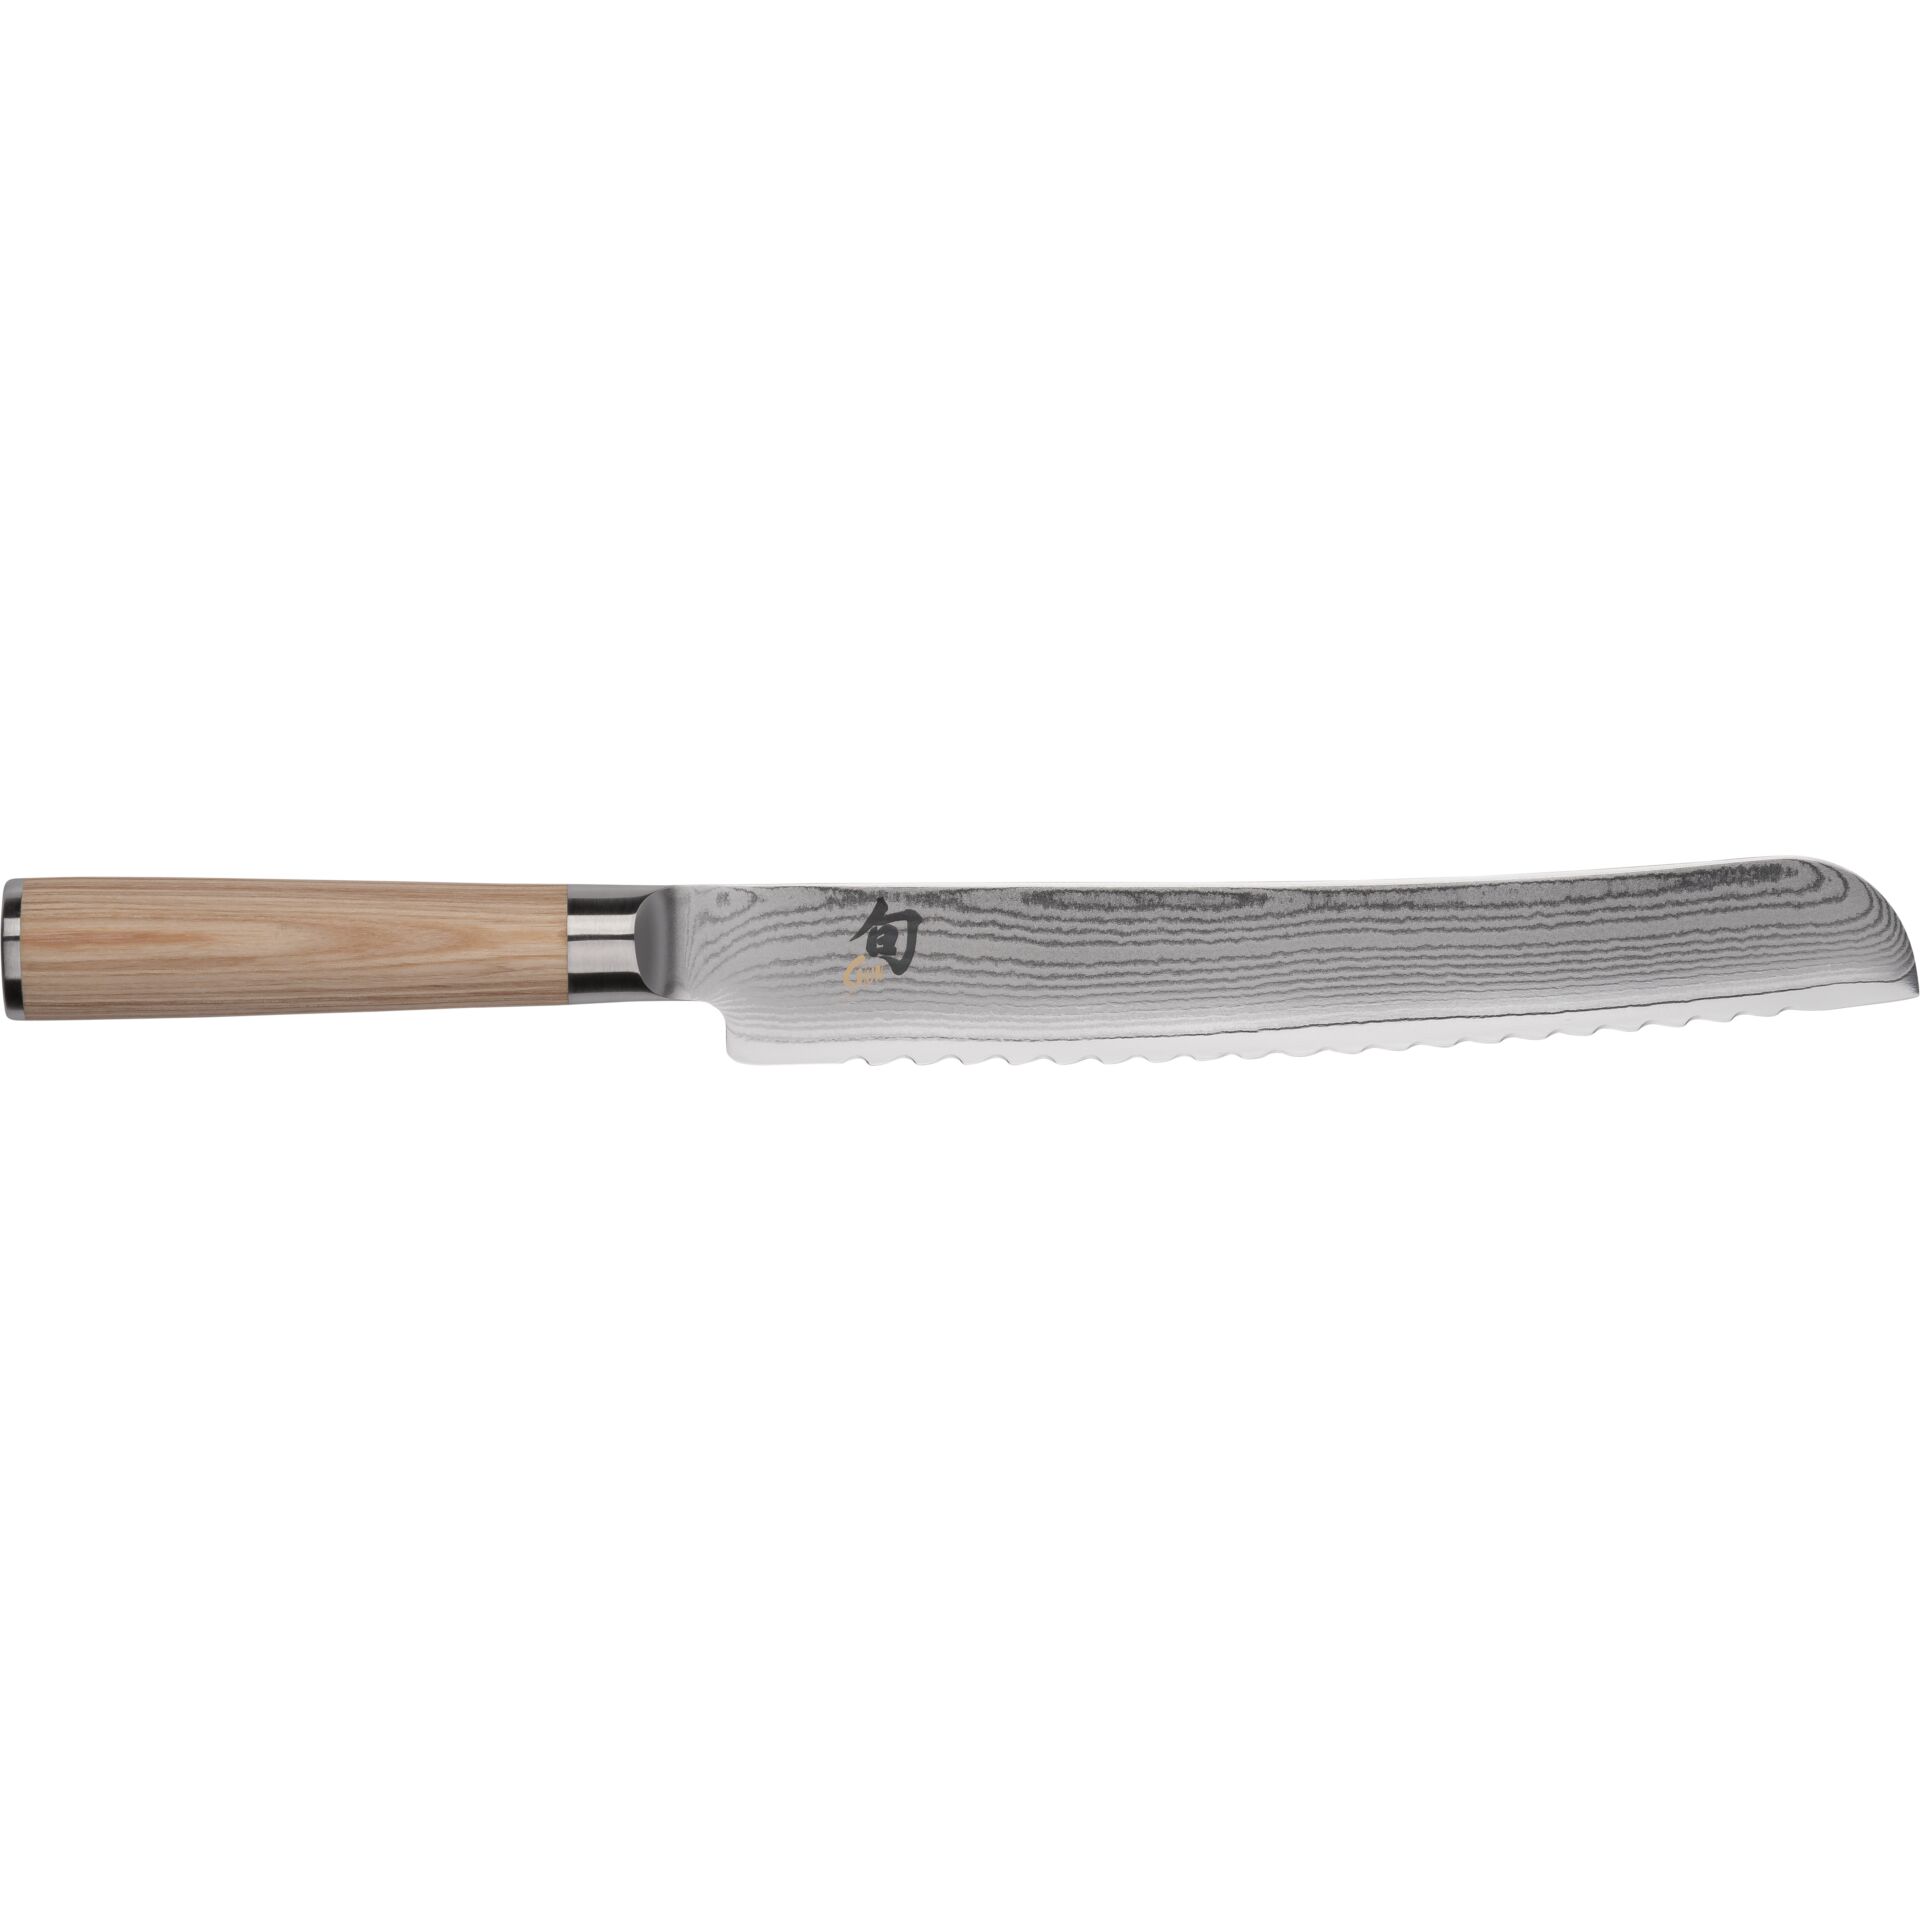 KAI Shun bianco coltello per il pane, 23 cm